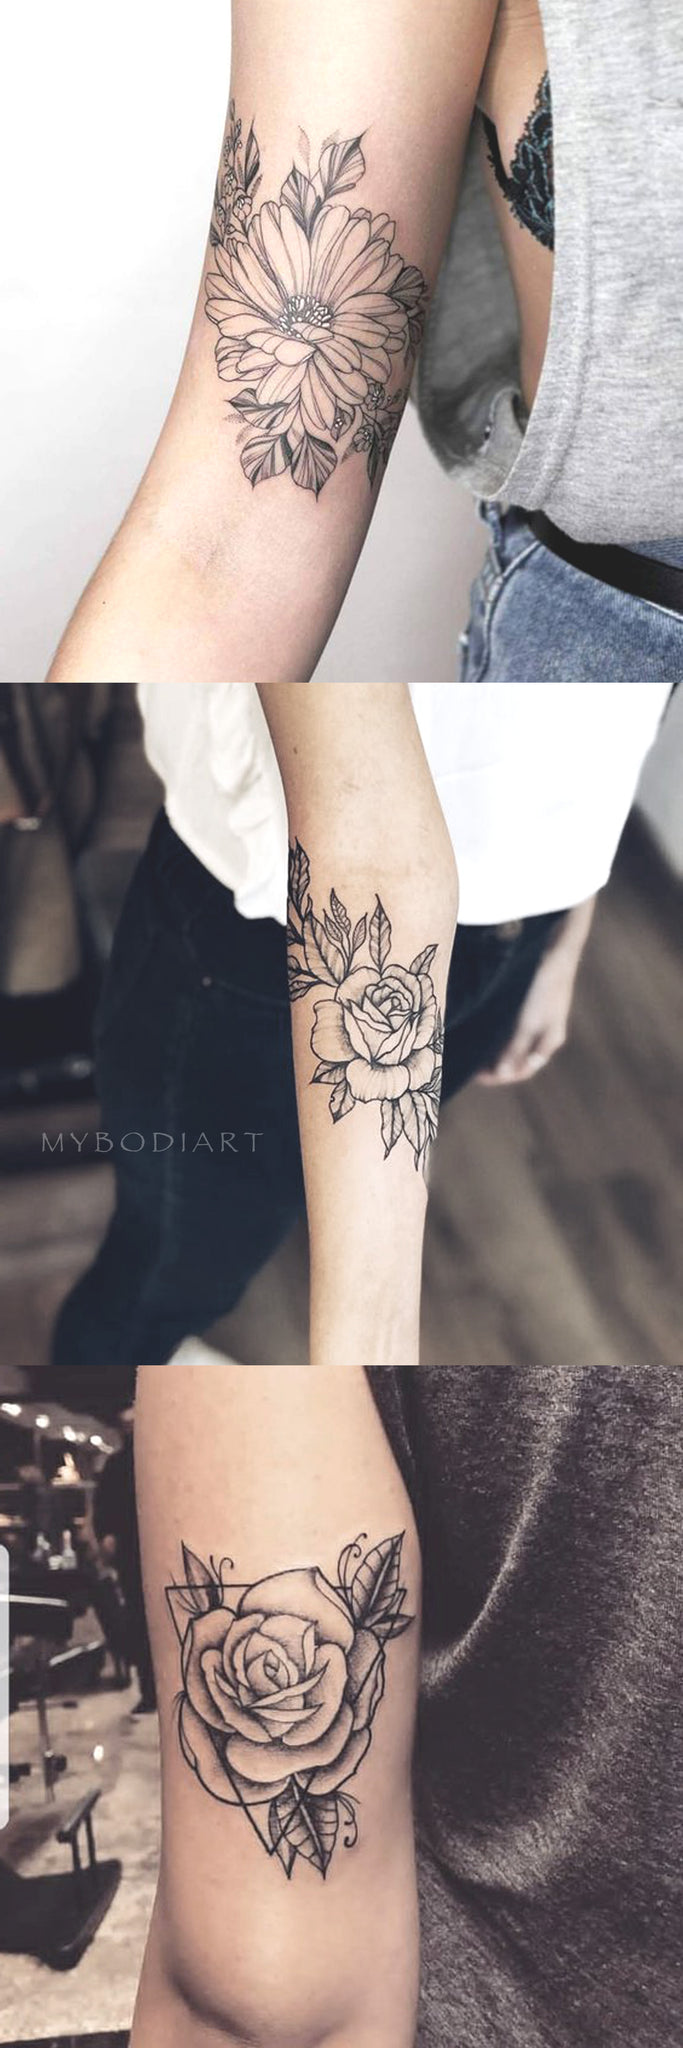 VIntage Traditional Black Outline Rose Sunflower Arm Tattoo Ideas for Women - www.MyBodiArt.com